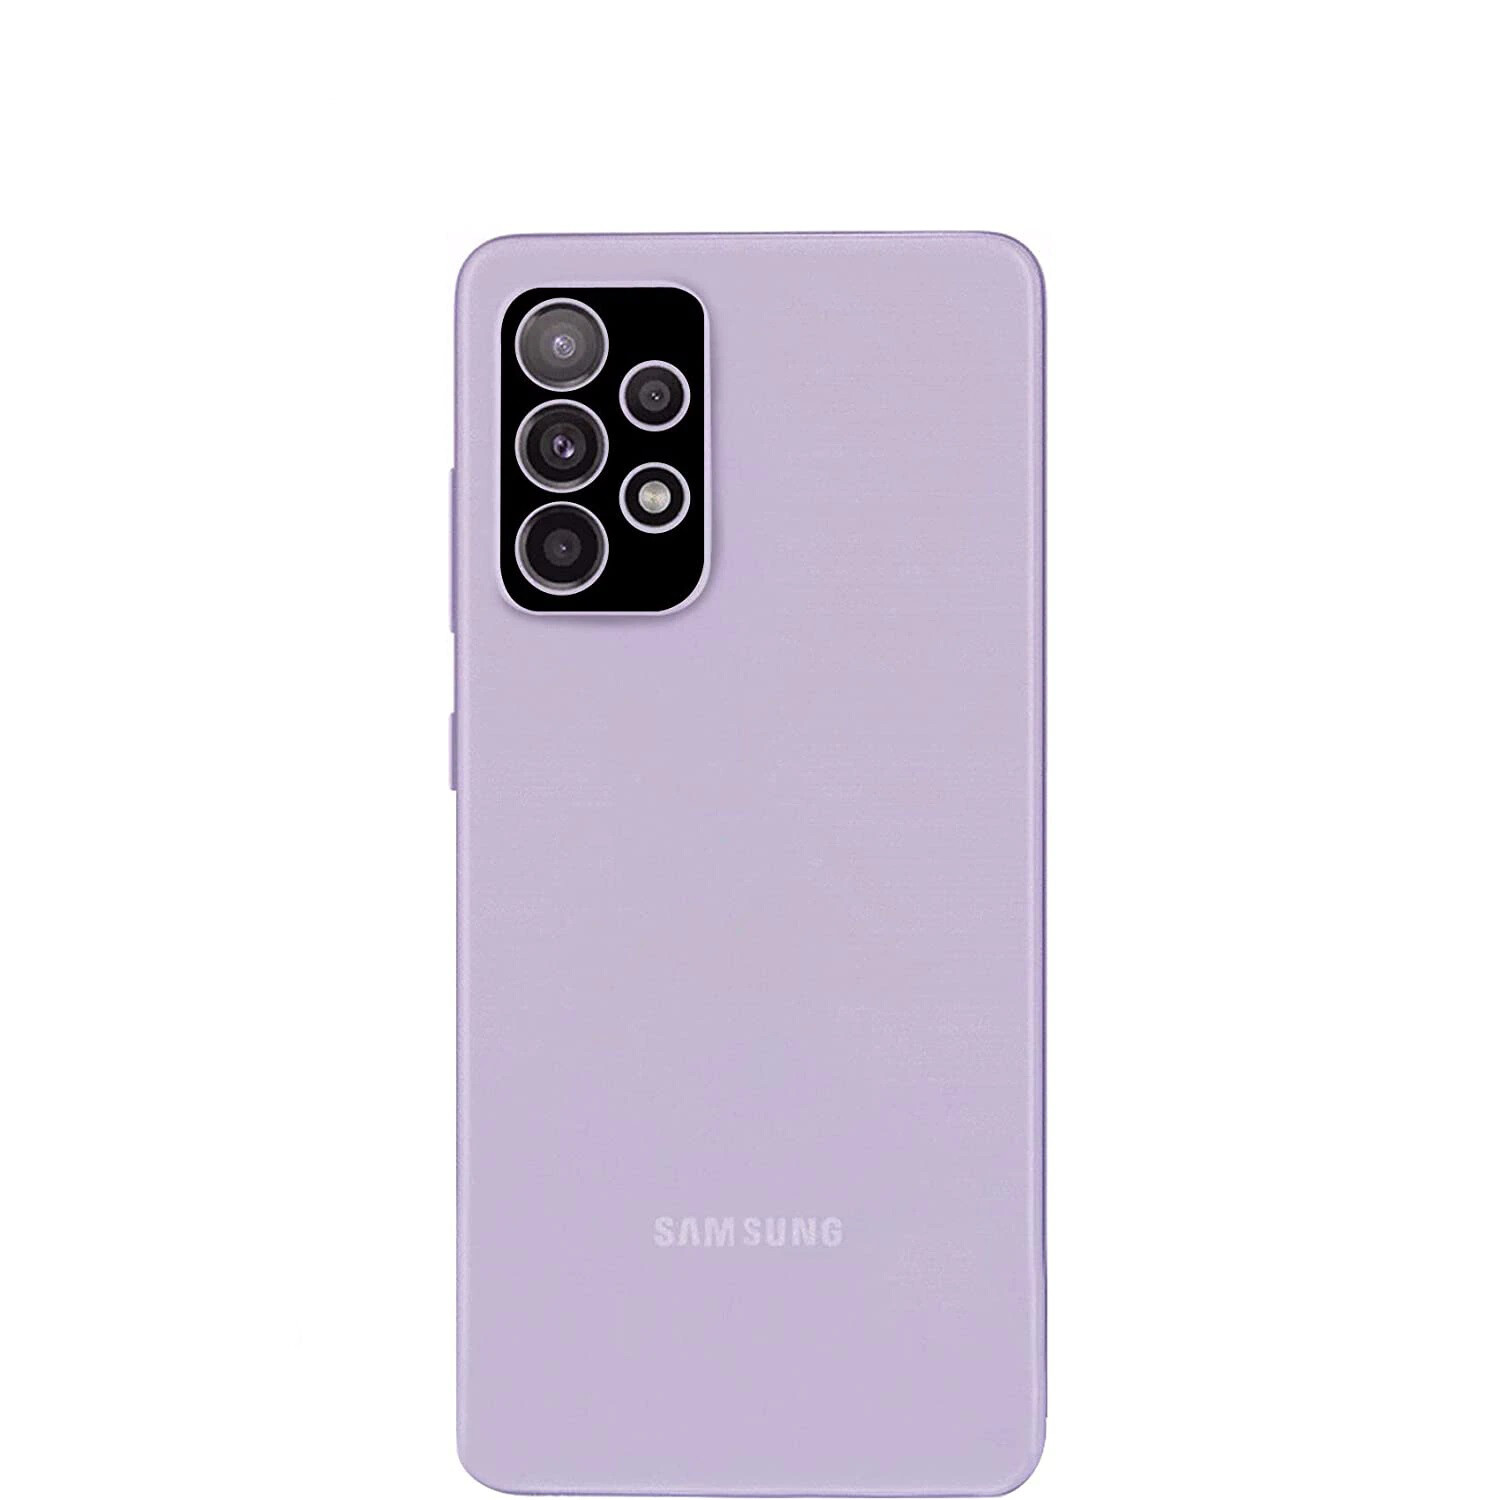 KNY Samsung Galaxy A72 in Full Yapan 3D Kamera Cam Koruyucusu Siyah